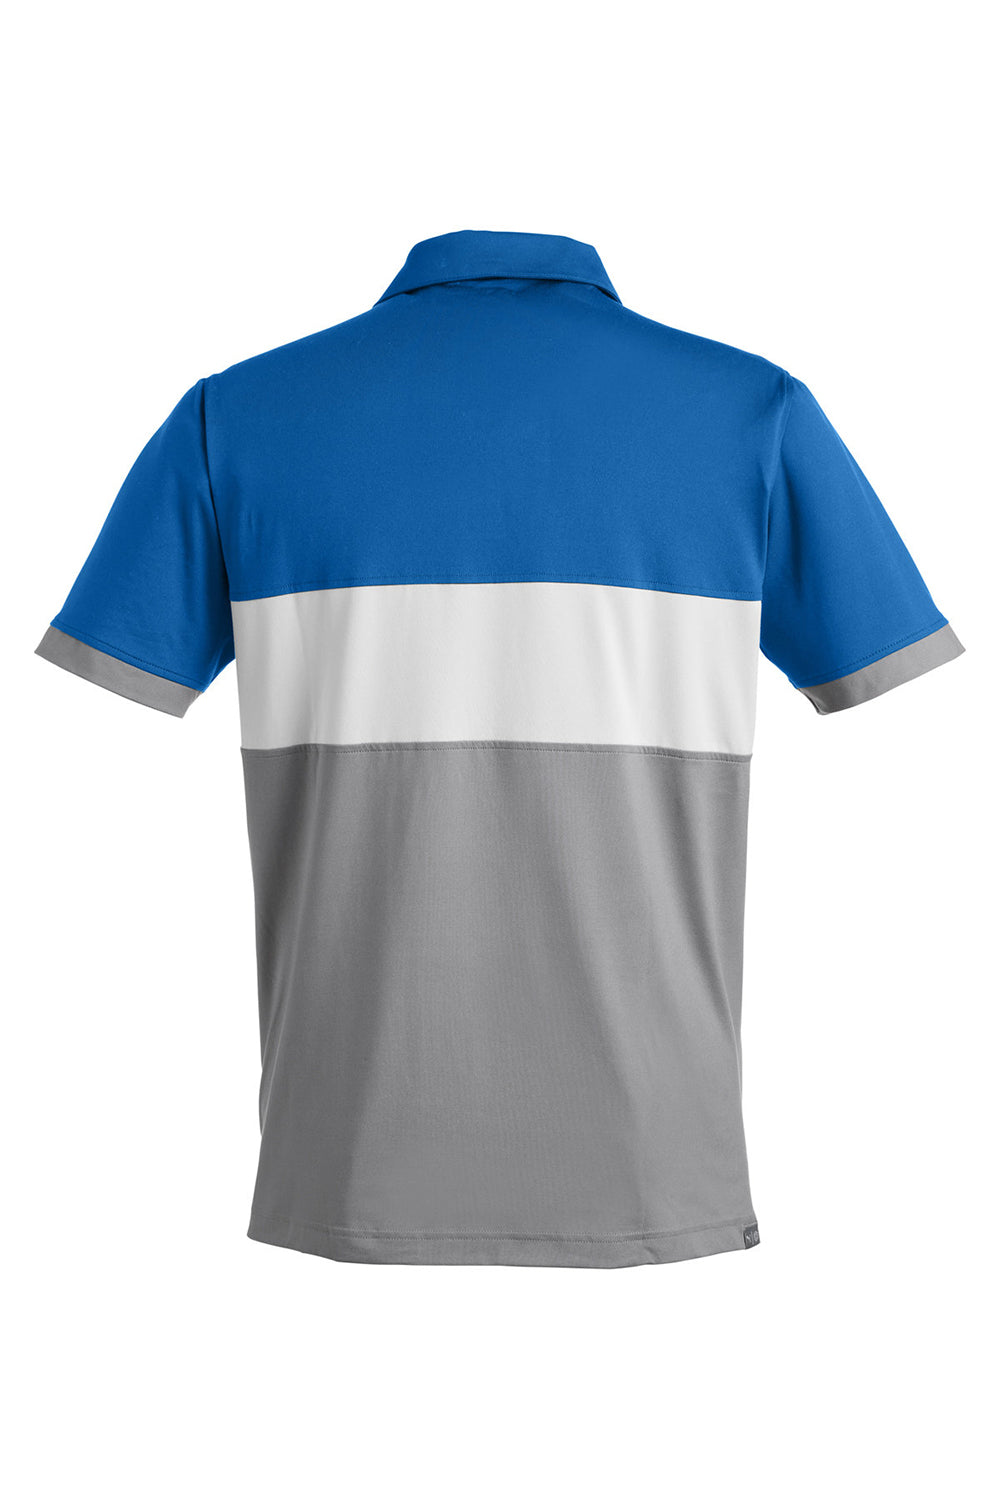 Puma 538930 Mens Cloudspun Highway Short Sleeve Polo Shirt Bright Cobalt Blue Flat Back